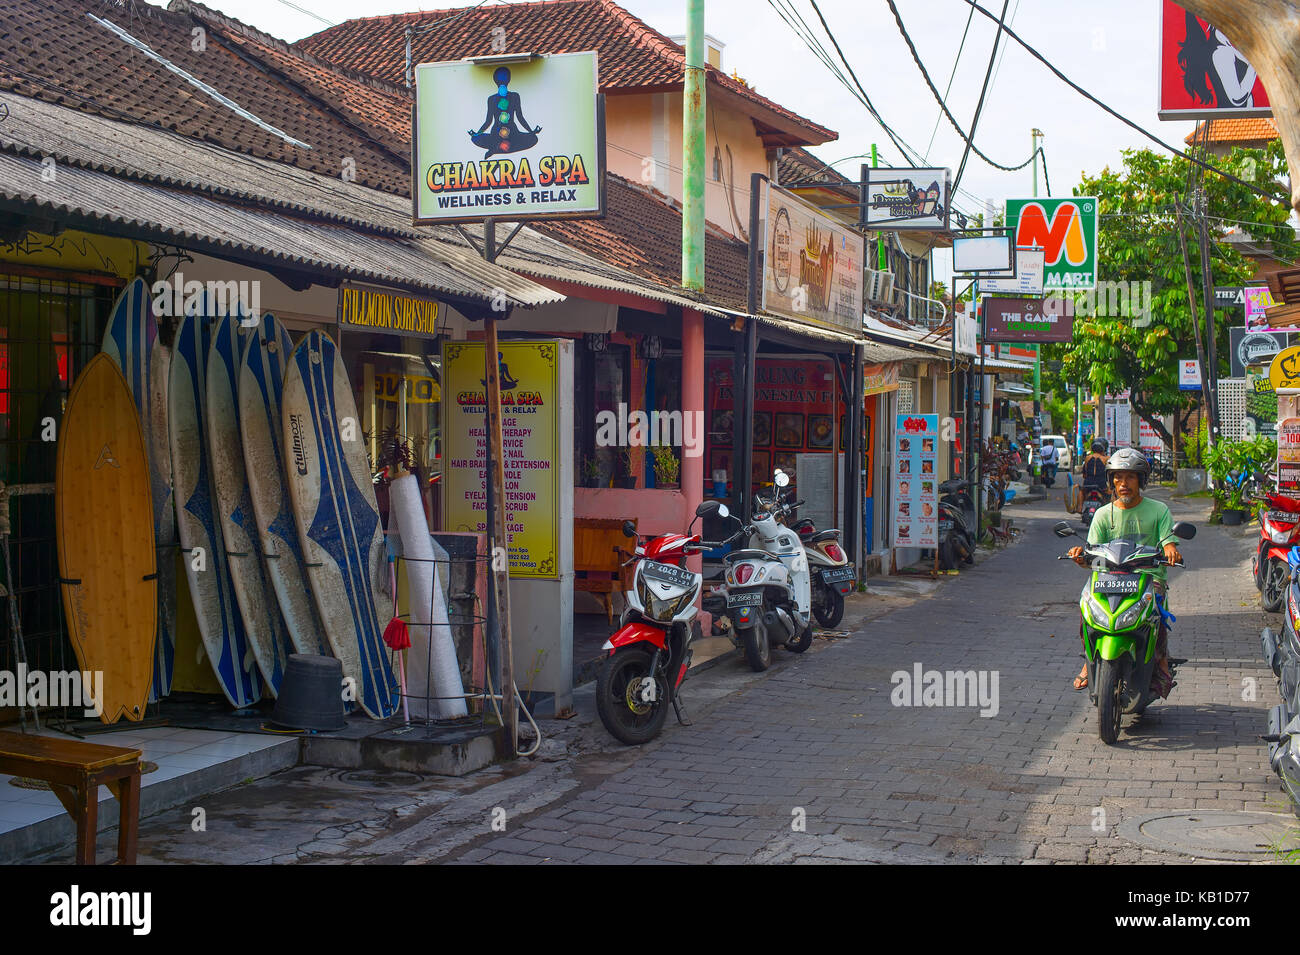 KUTA, BALI ISLAND, INDONESIA - JAN 28, 2017: Typical street with local touristic shops in Kuta. Kuta is the most famous and crowded tourist destinatio Stock Photo